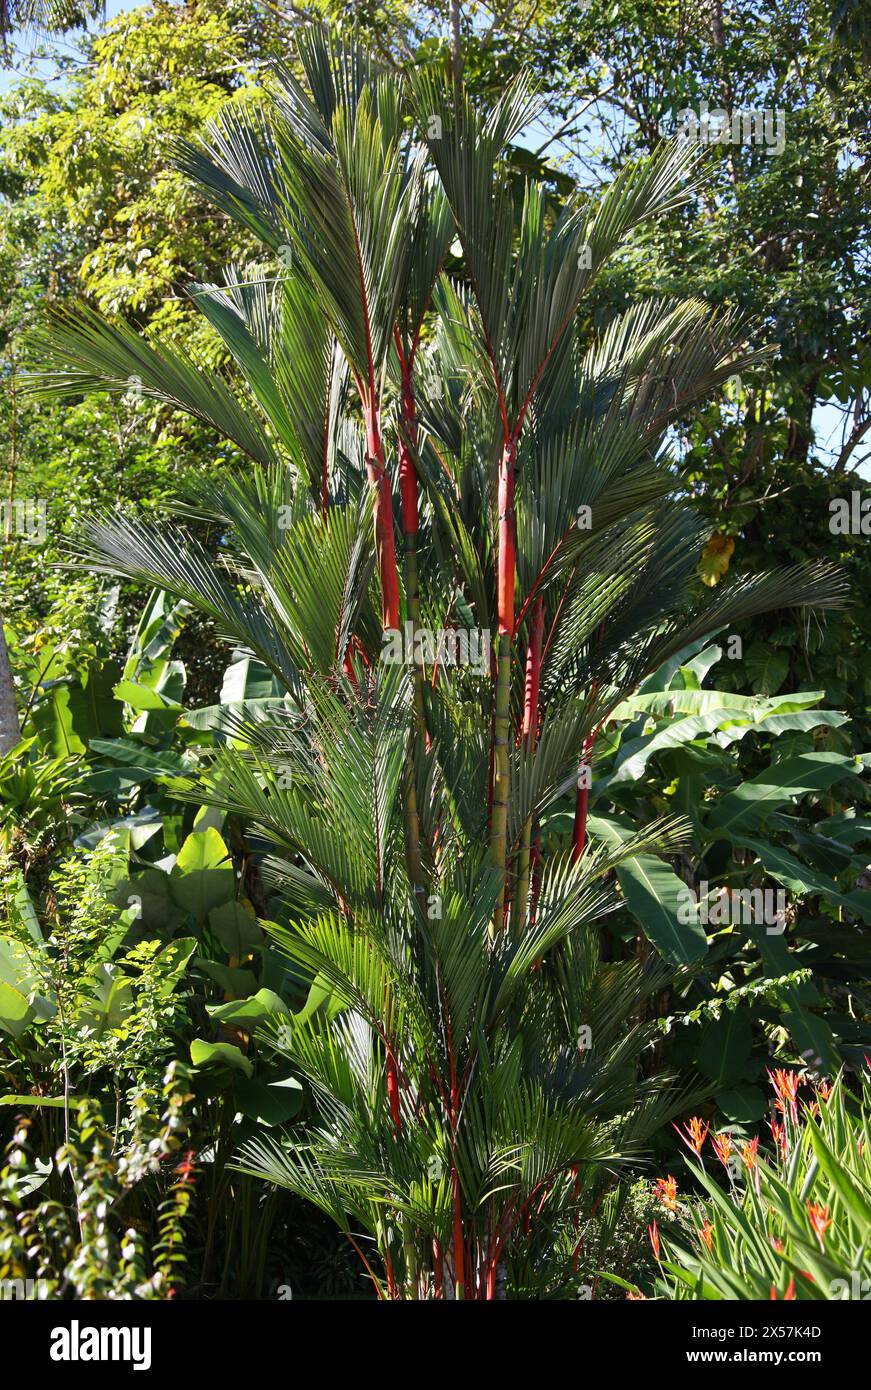 Red Sealing Wax Palm, aka Lipstick Palm or Rajah Palm, Cyrtostachys renda, Arecaceae, Palmae. Manuel Antonio, Costa Rica, Central America. Lowland rai Stock Photo